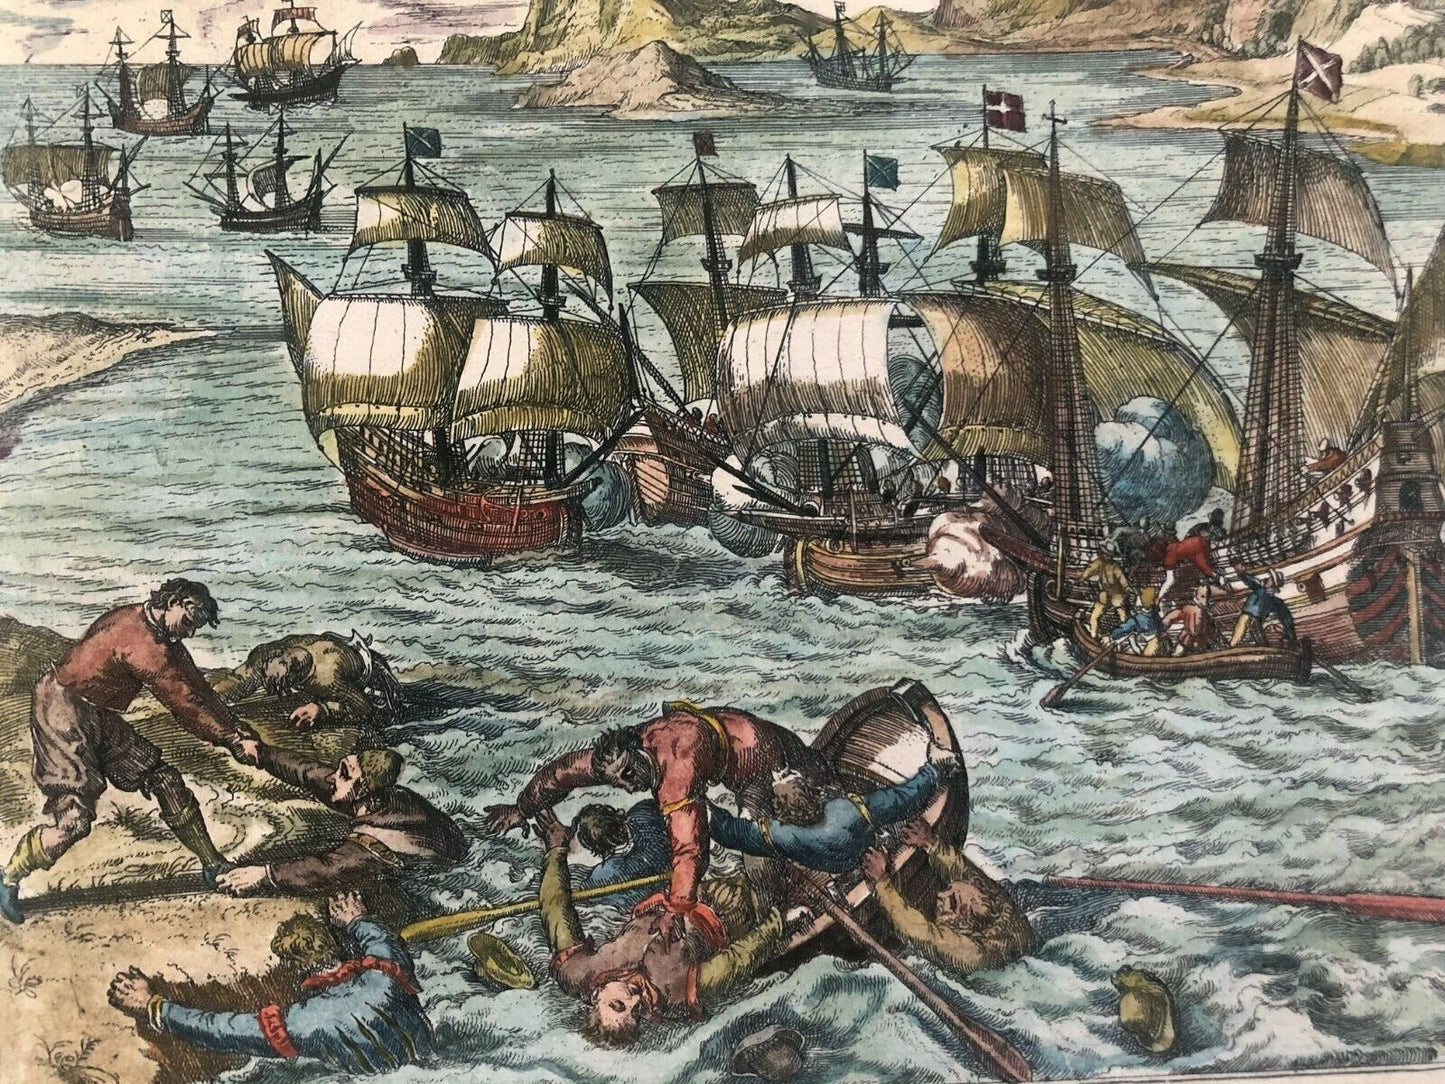 De Bry - "The French defeat the Spanish at Havana" 1595 - Cuba